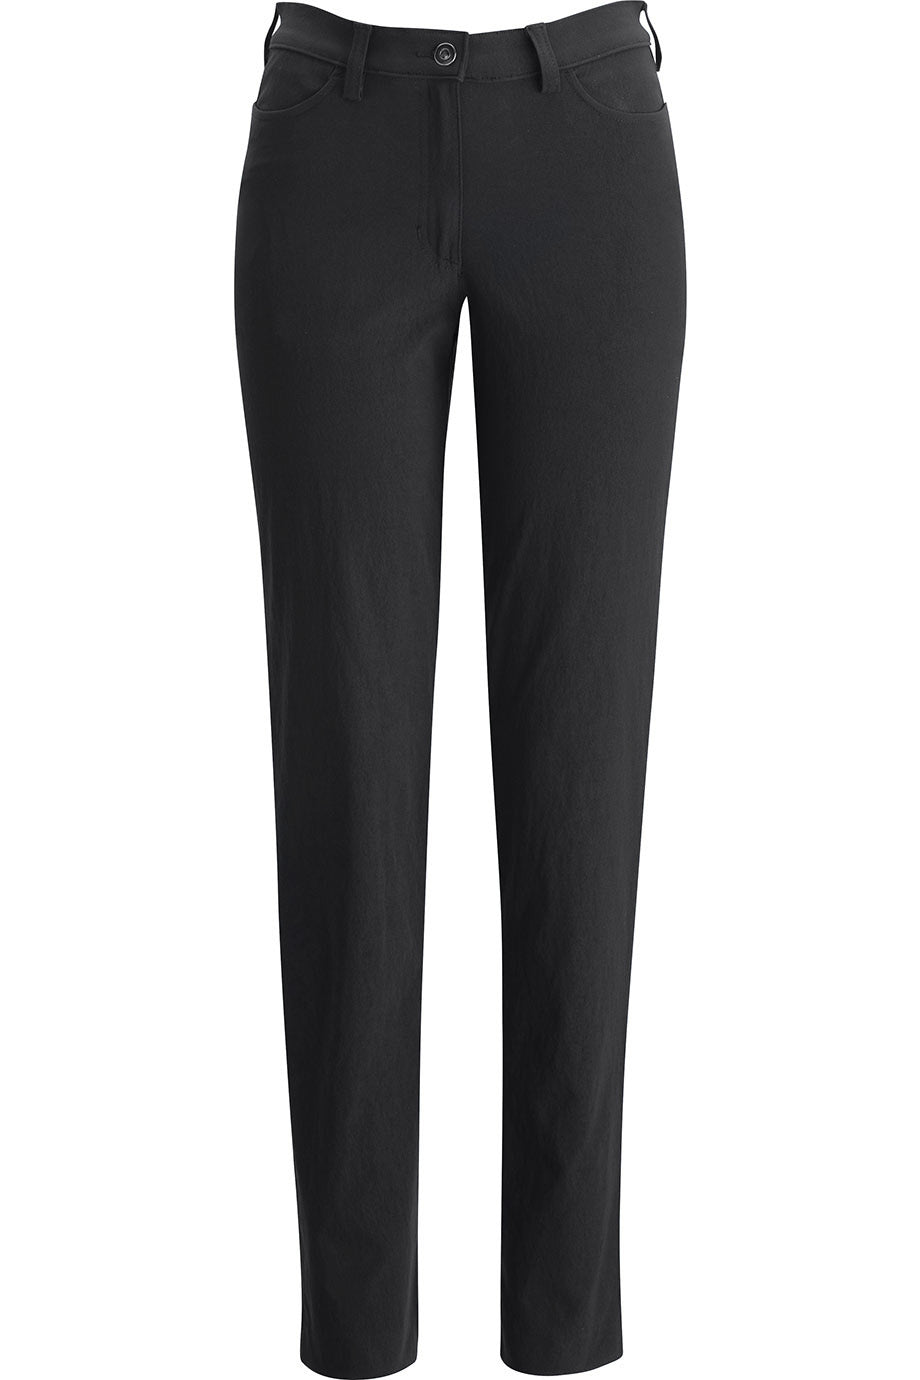 Edwards 0 Ladies' Black Flex Comfort Pant